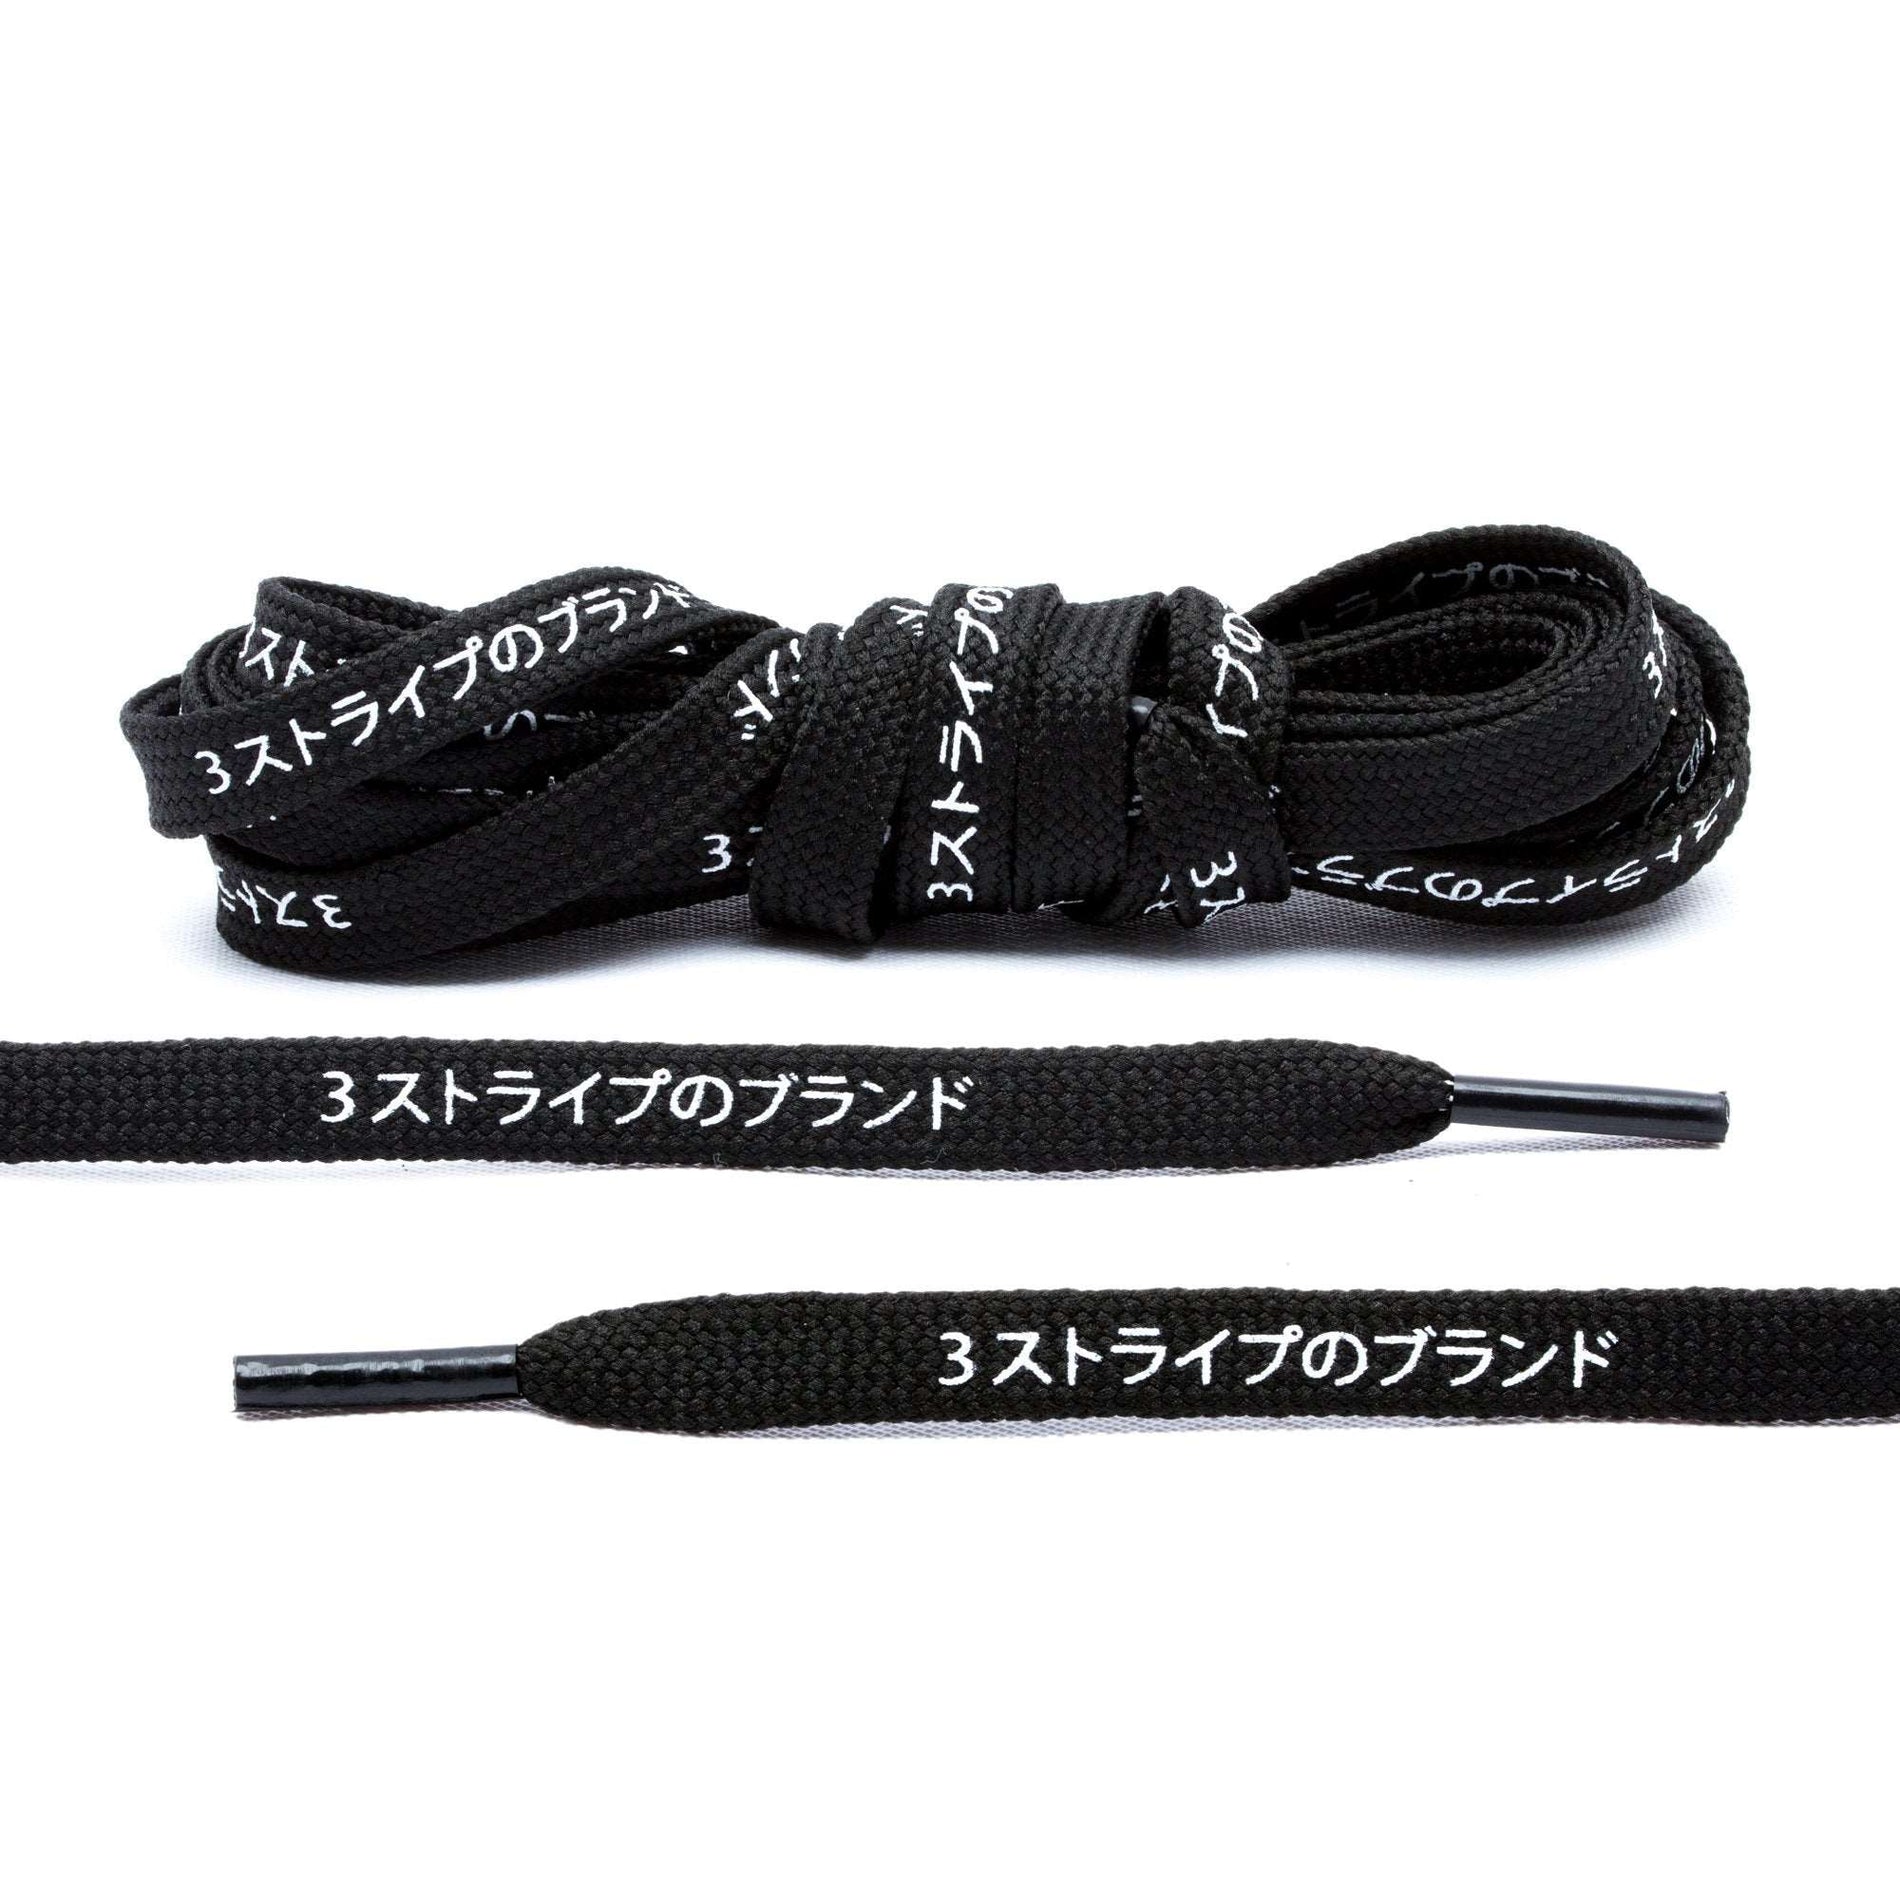 Black Japanese Katakana Shoe Laces | Shoe Laces